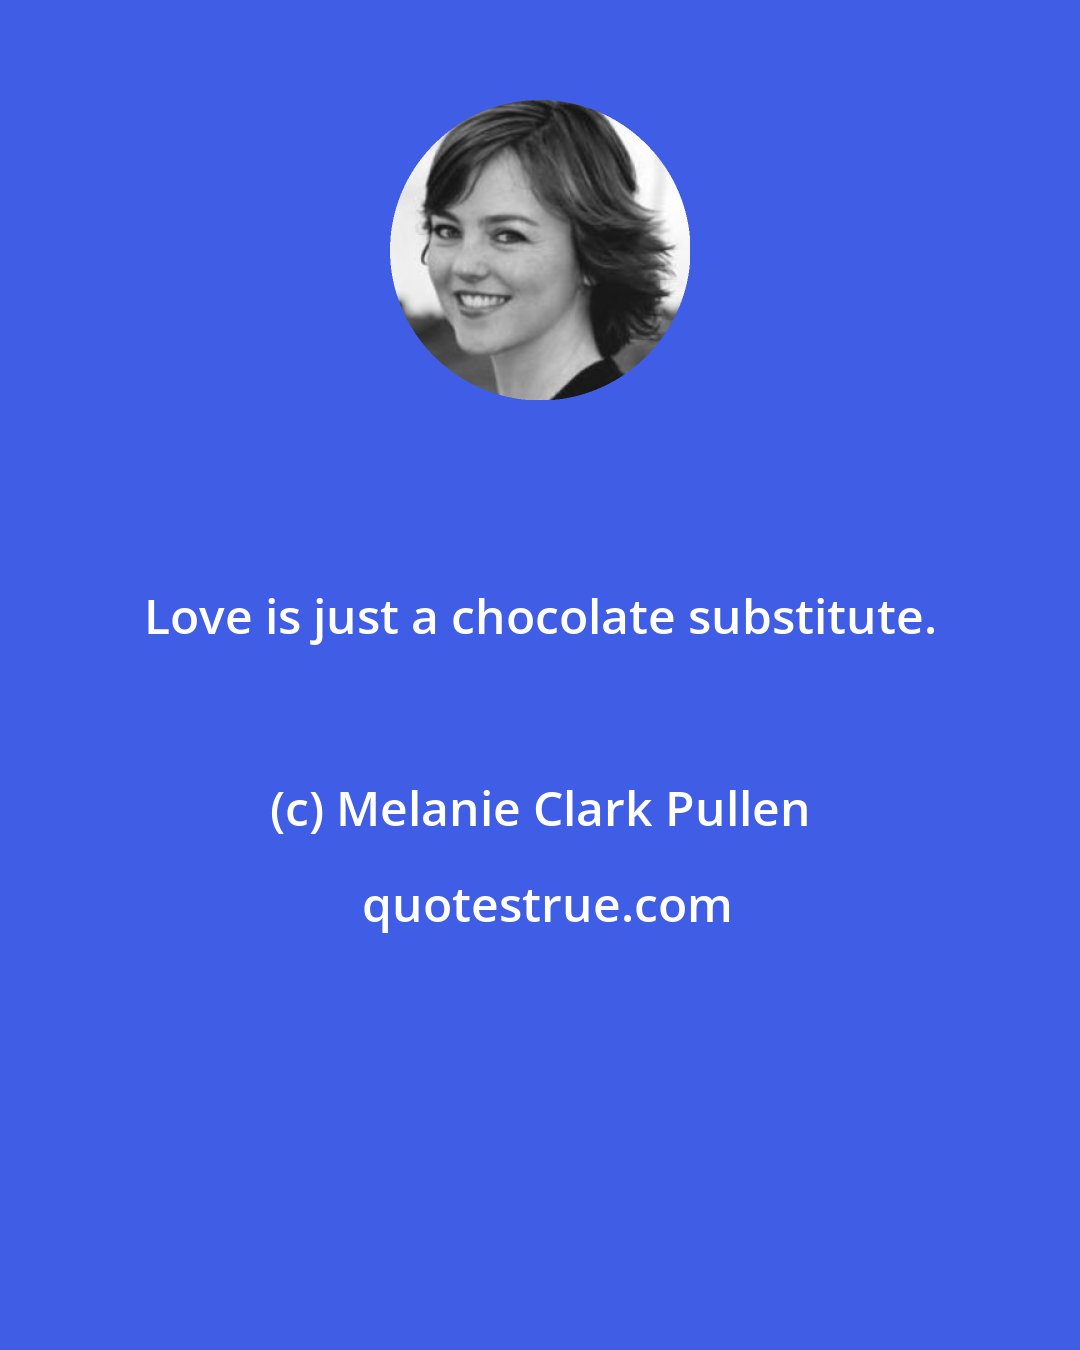 Melanie Clark Pullen: Love is just a chocolate substitute.